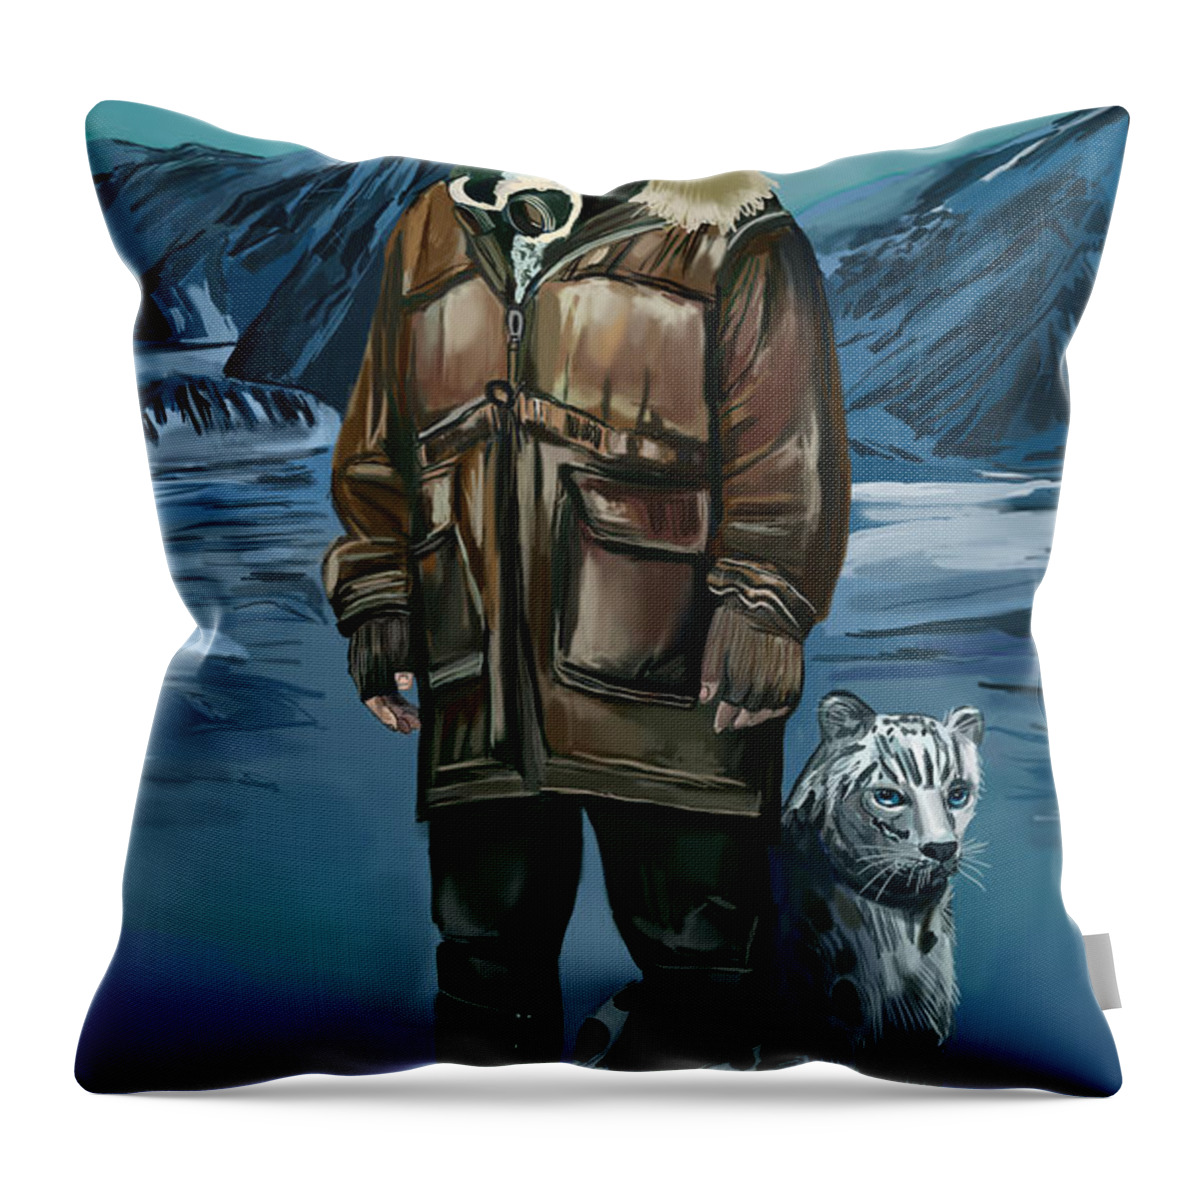 Abstract Throw Pillow featuring the digital art Tiger #13 by Bogdan Floridana Oana